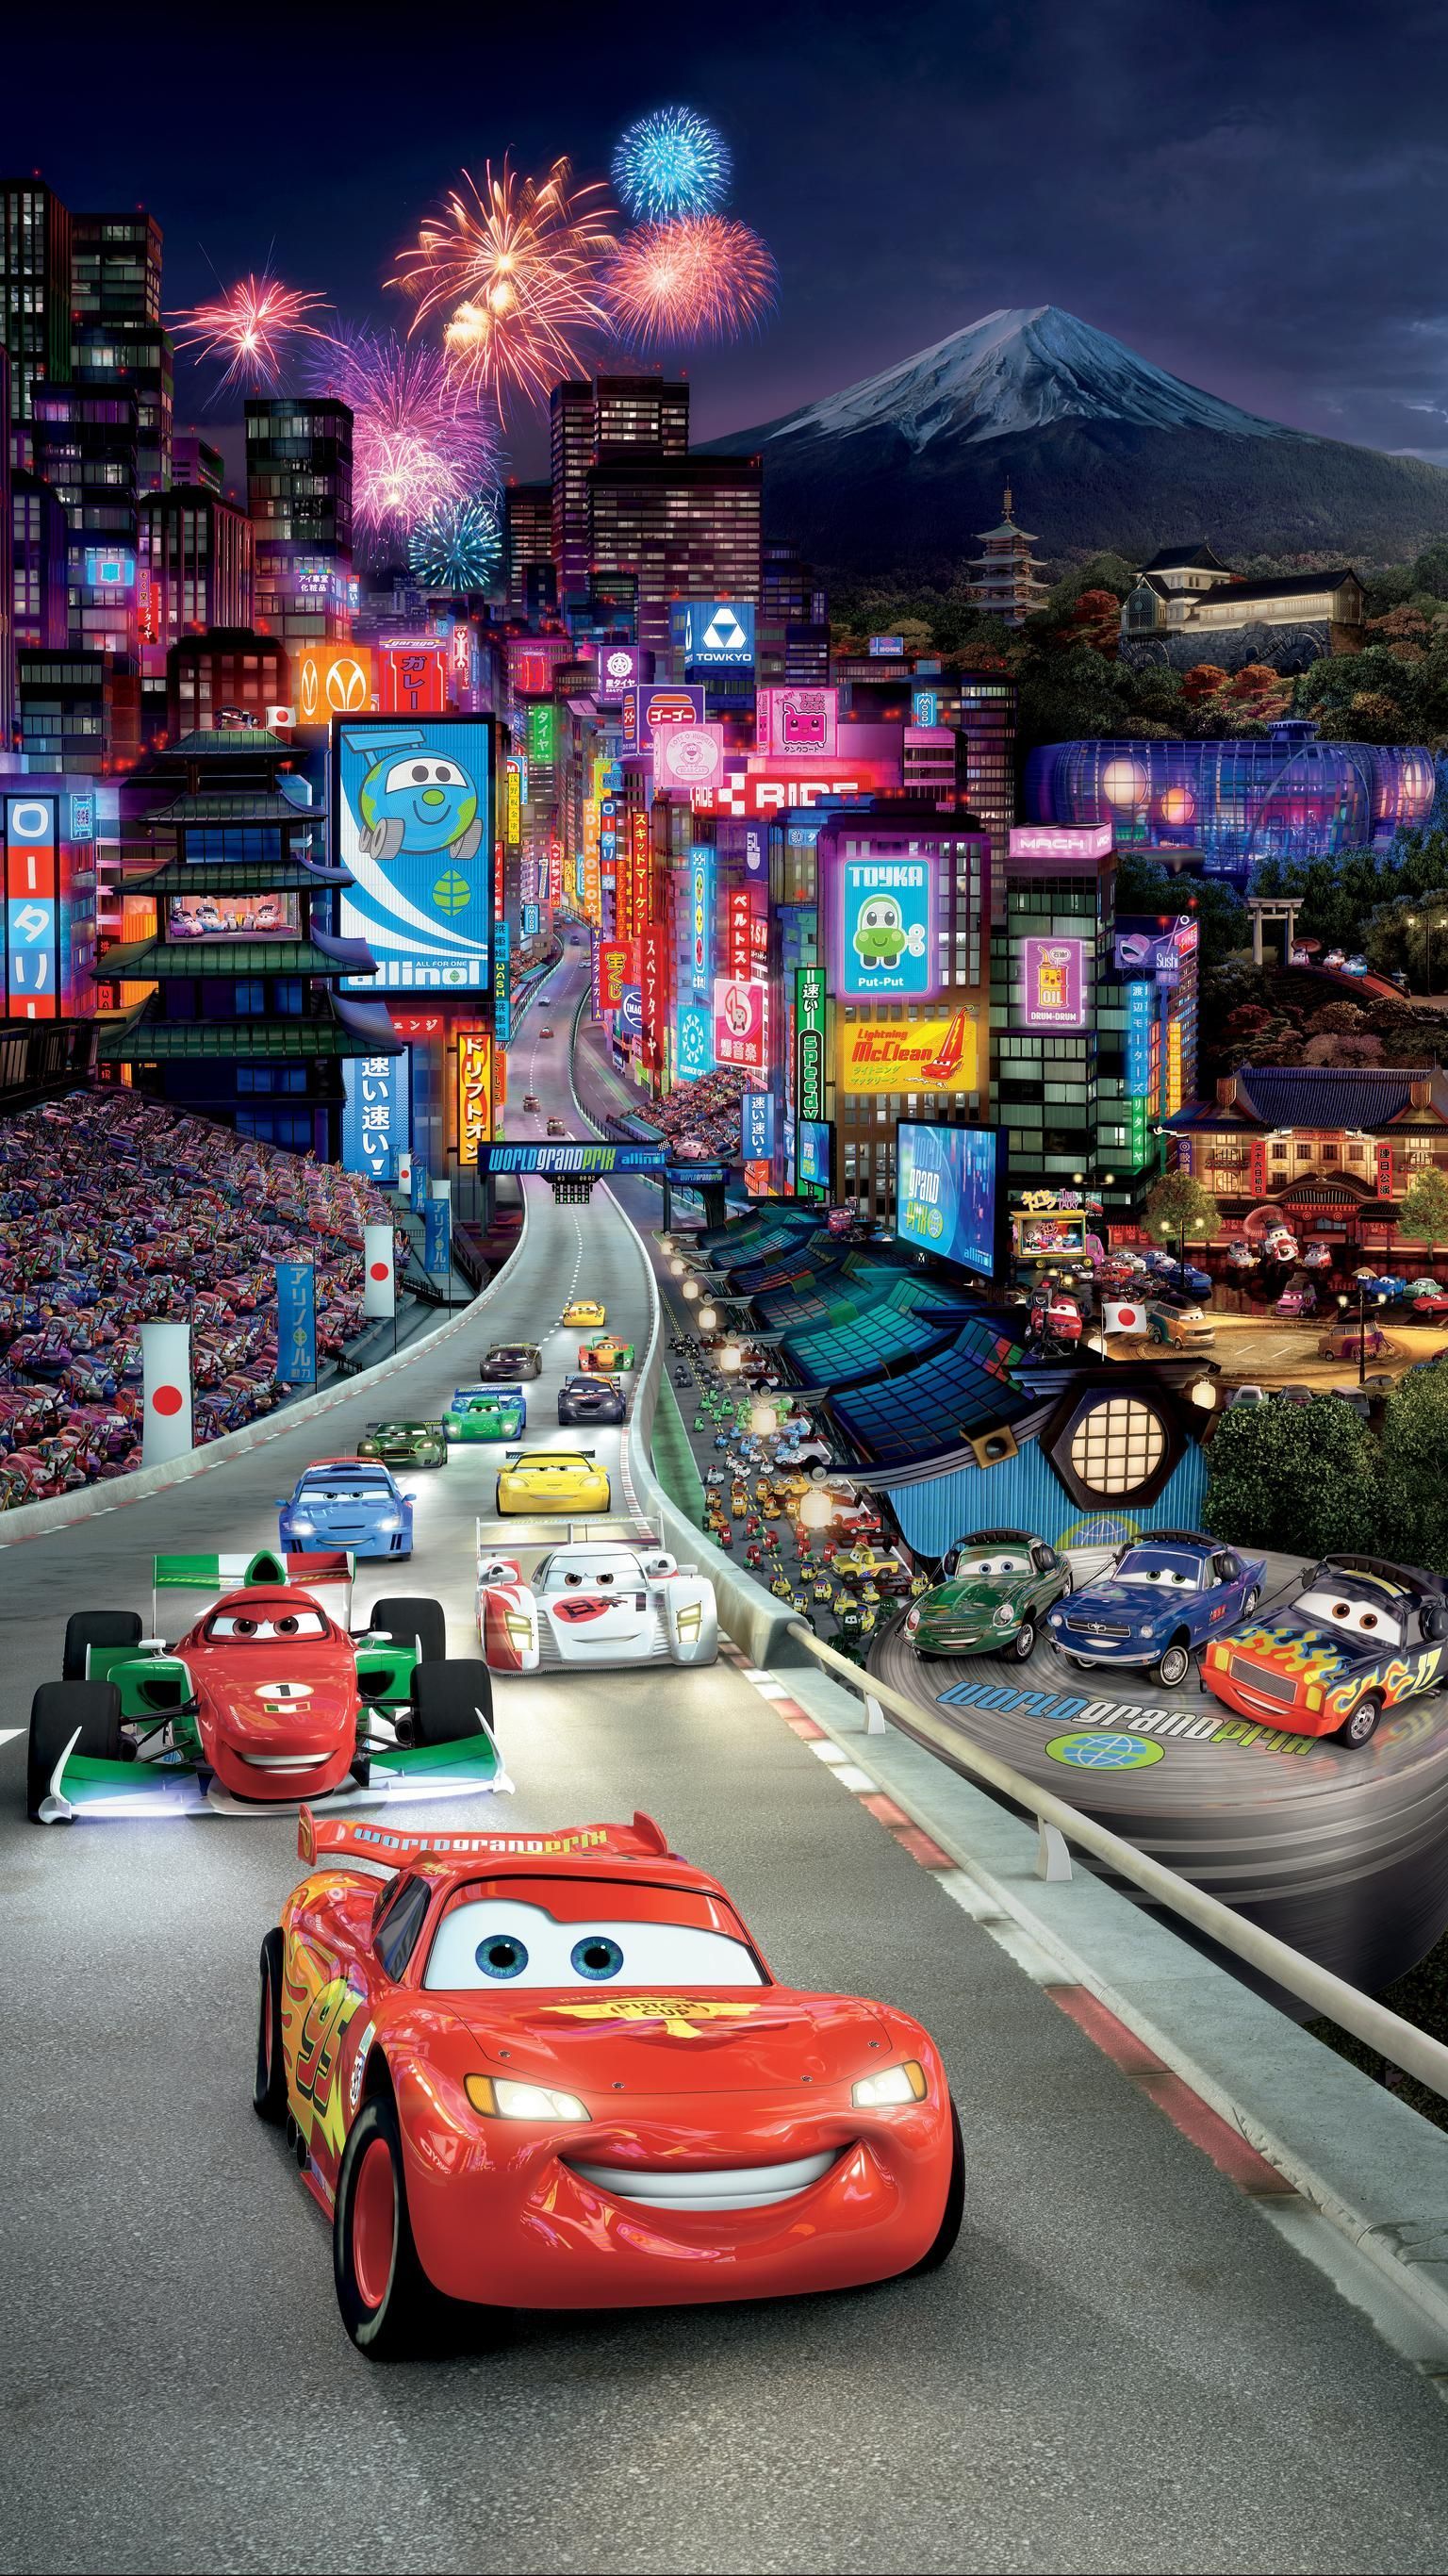 Cars 2 (2011) Phone Wallpaper. Moviemania. Disney cars wallpaper, Cars movie, Cars cartoon disney